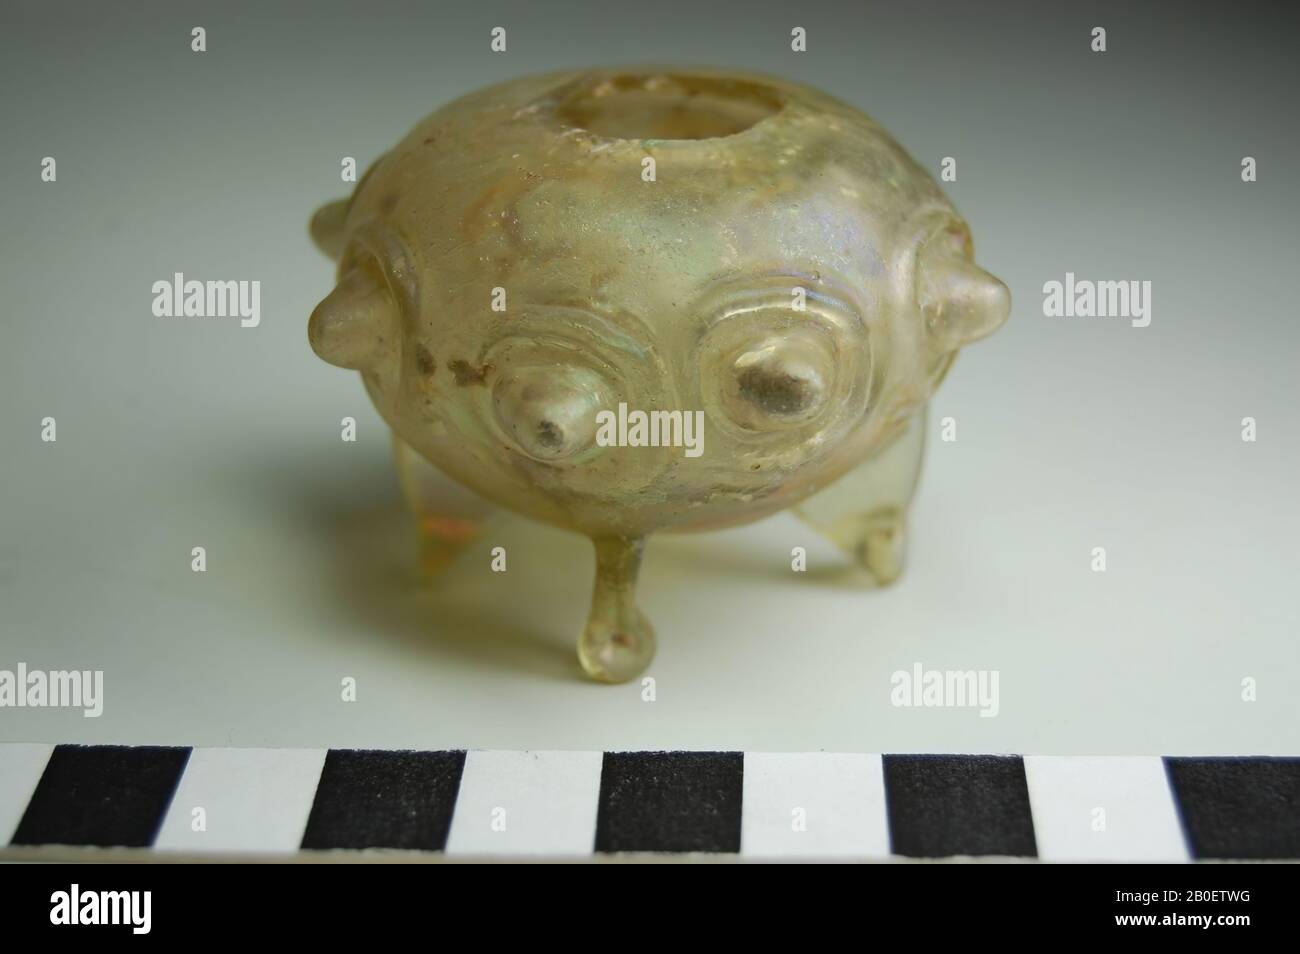 Pot, pied, Fragment d'un pot de vert clair Banque D'Images